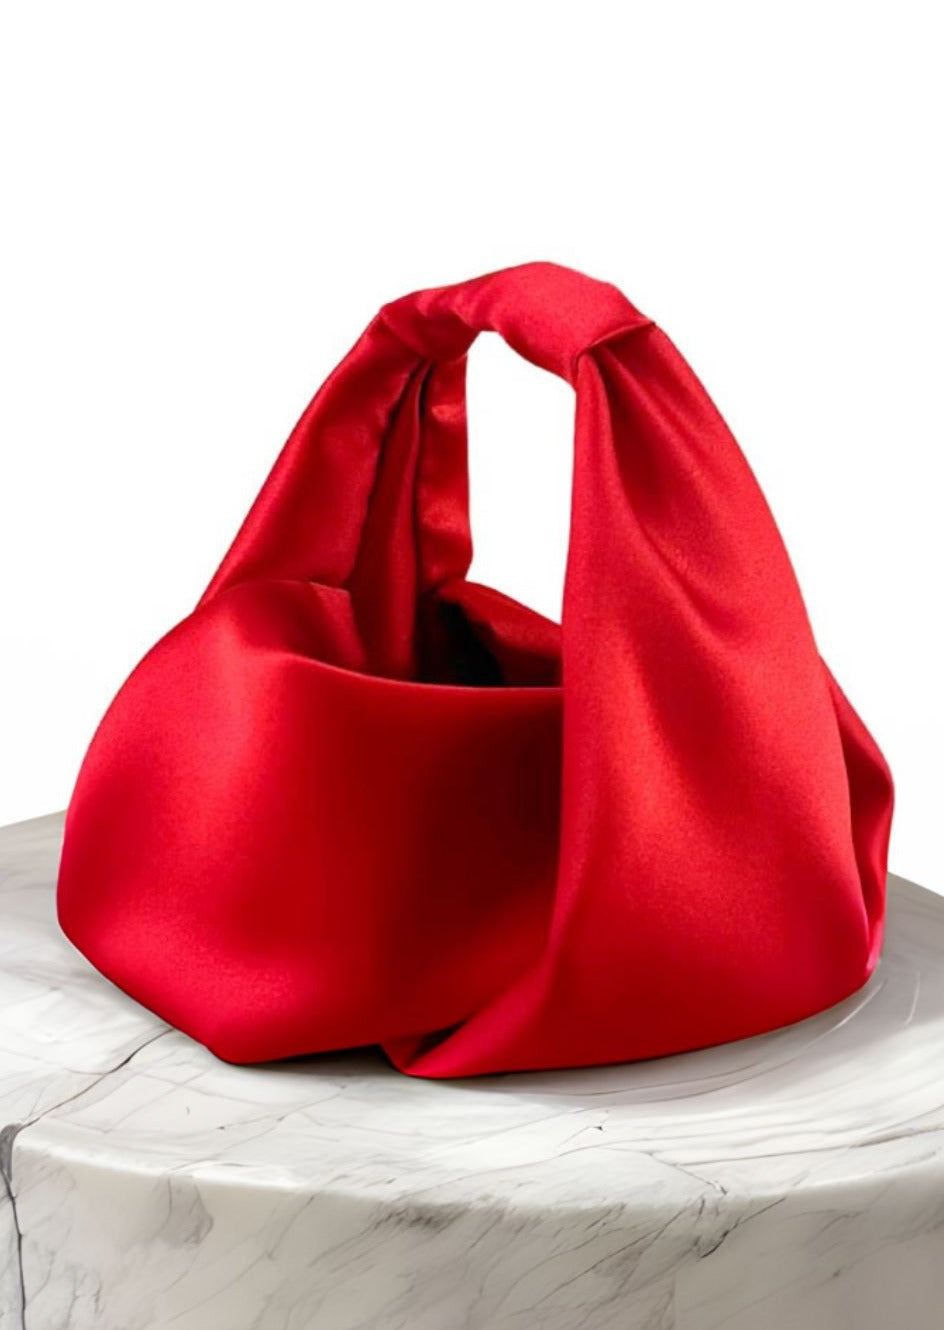 Parachute Bag - Red Silk Satin